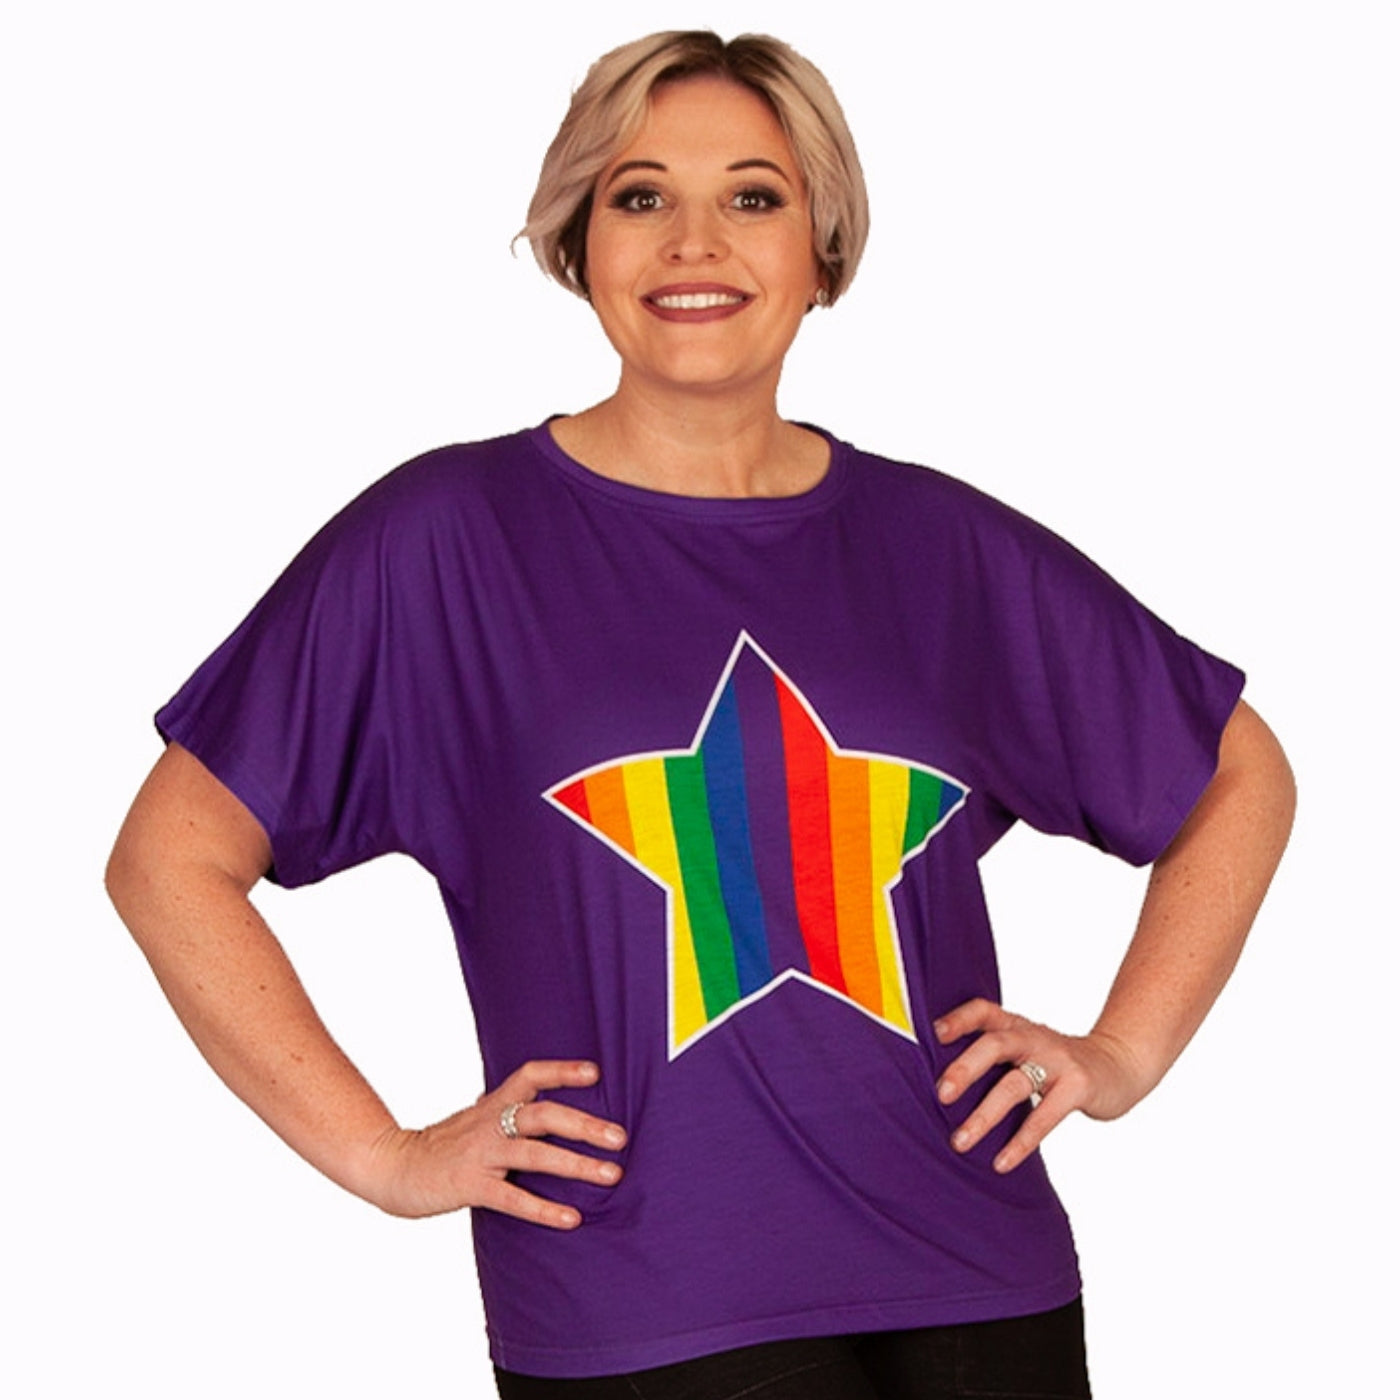 Starburst Batwing Top by RainbowsAndFairies.com.au (Rainbow Star - Purple - Rainbow Brite - Retro Knit Top - Mod - Vintage Inspired - Kitsch) - SKU: CL_BATOP_STARB_ORG - Pic-03